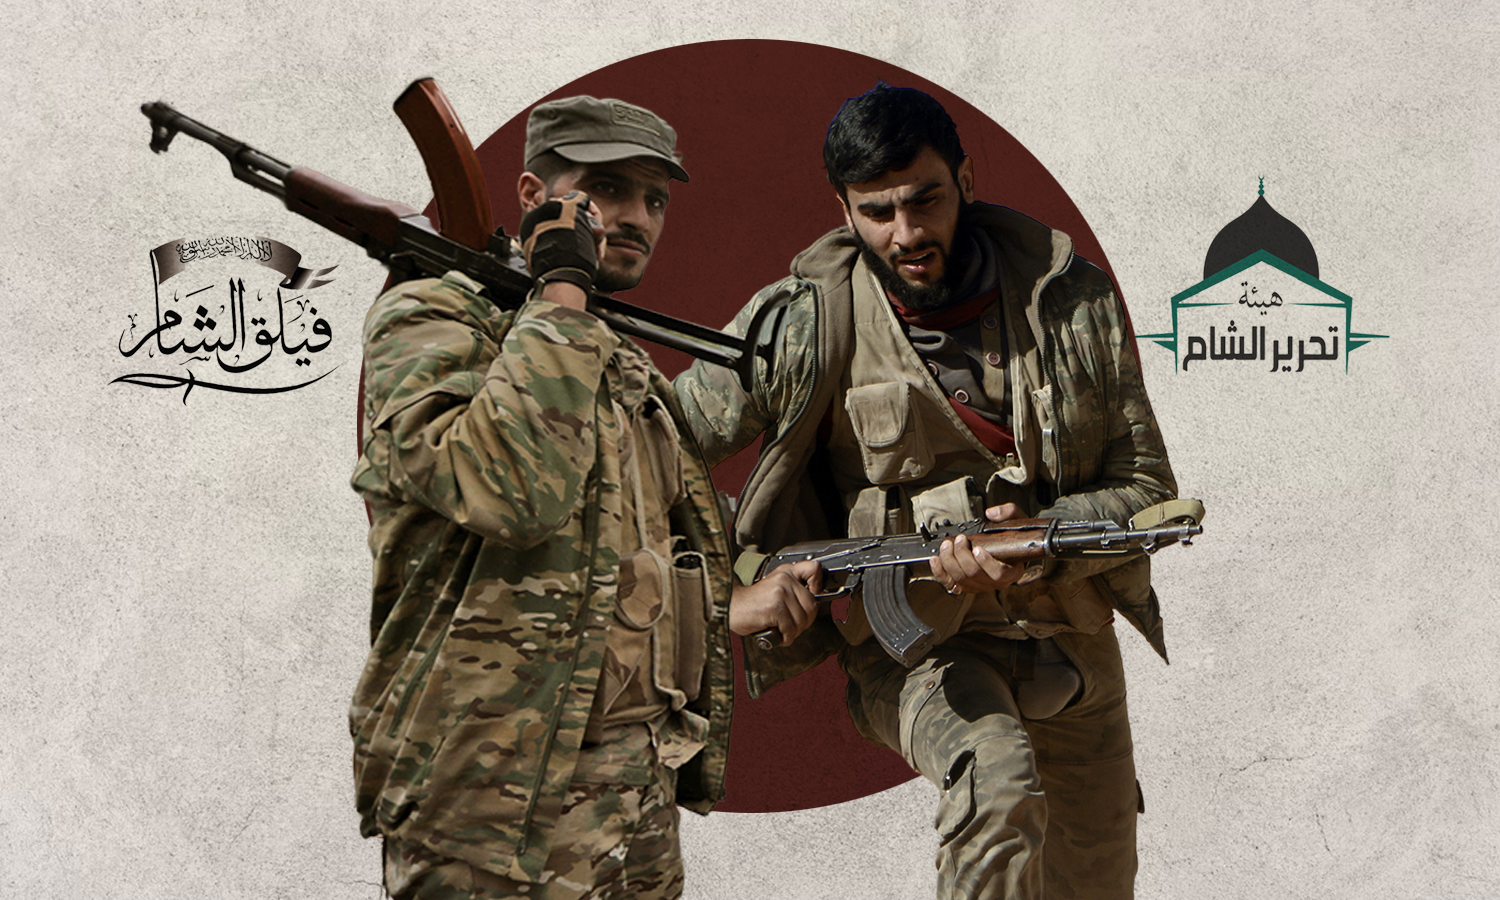 Two fighters from the Sham Legion and Hayat Tahrir al-Sham (edited by Enab Baladi)